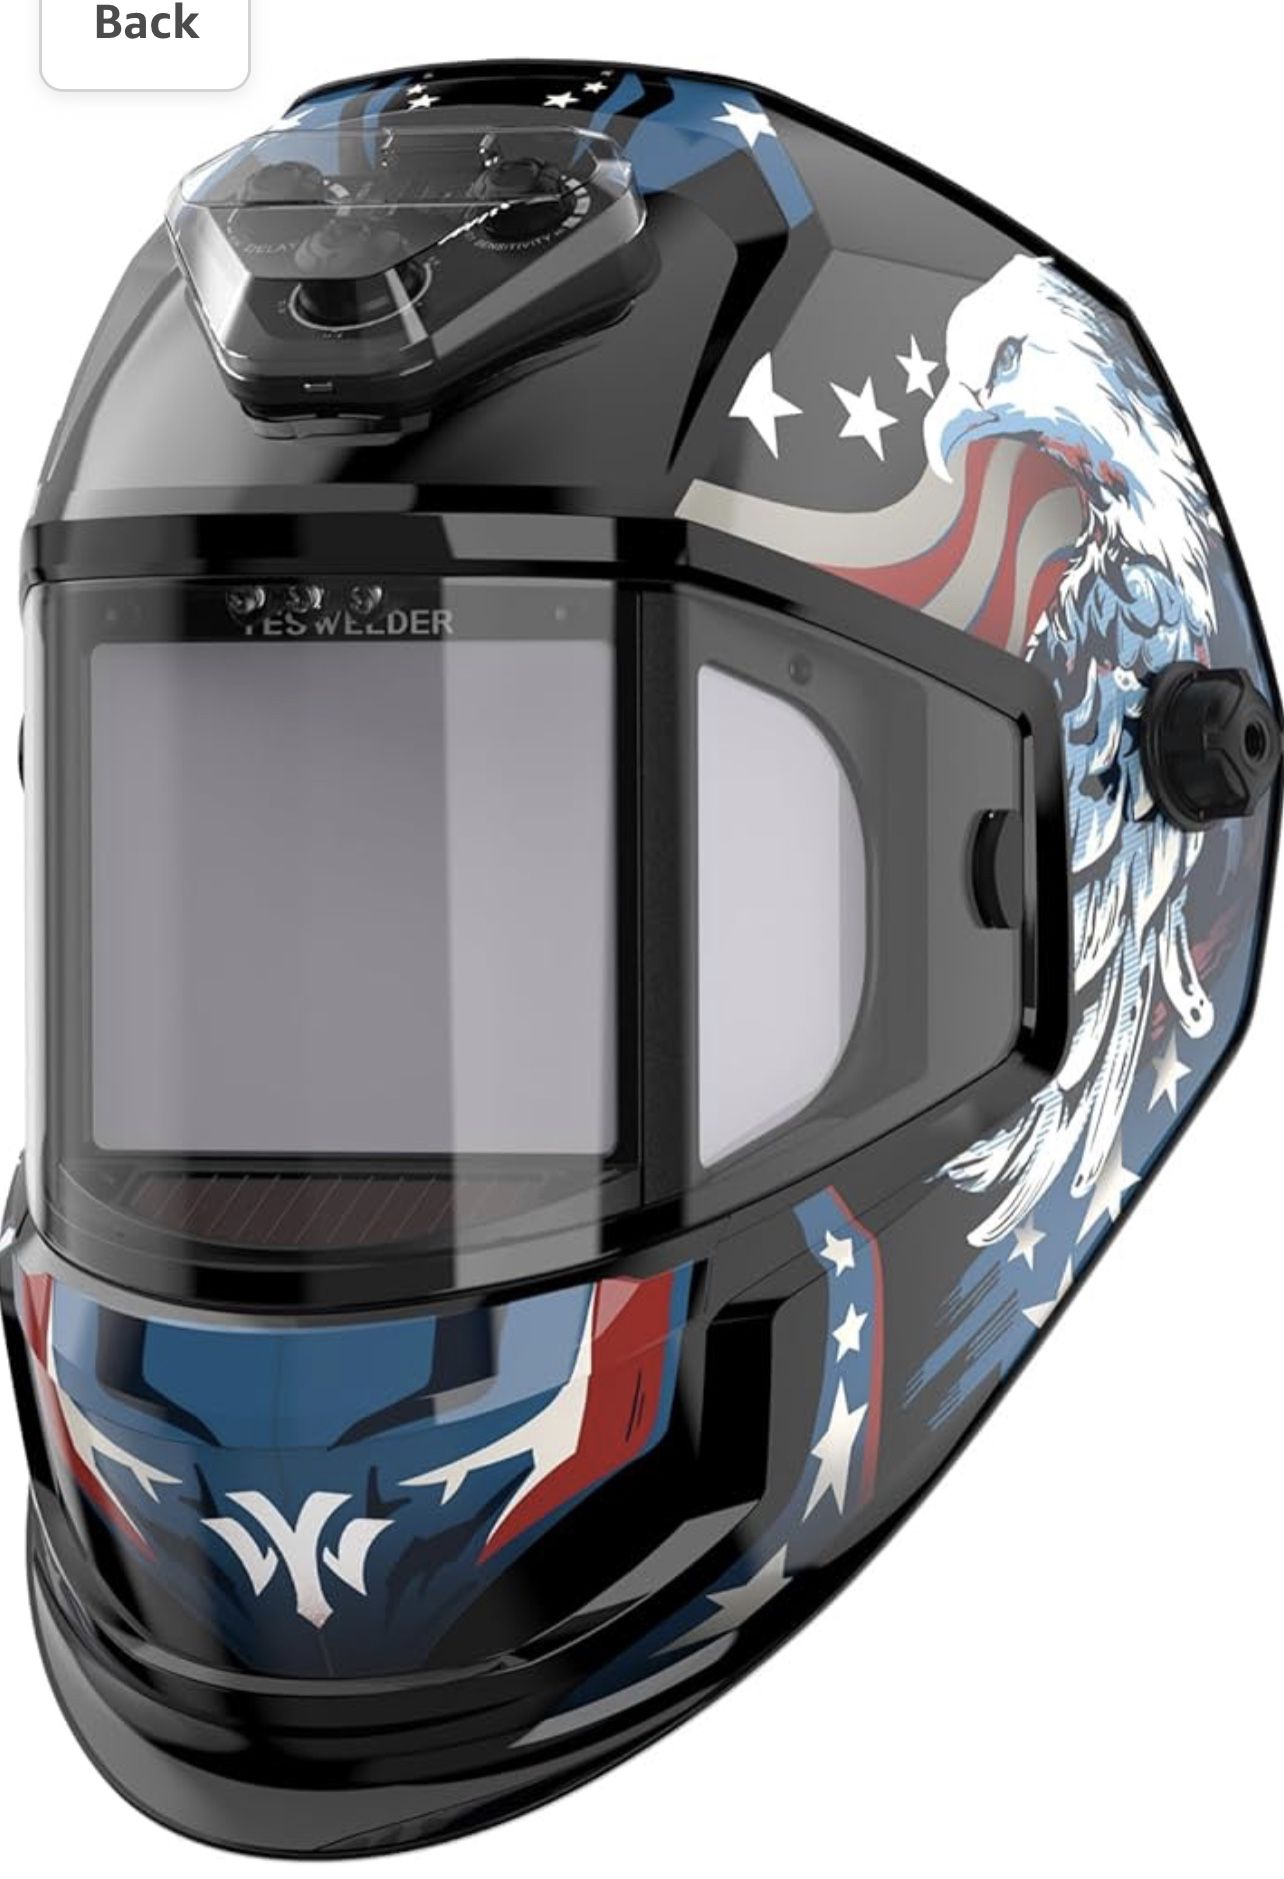 YESWELDER Panoramic View Auto Darkening Welding Helmet, Large Viewing True Color 6 Arc Sensor Welder Mask,LED Lighting & Type-C Charging